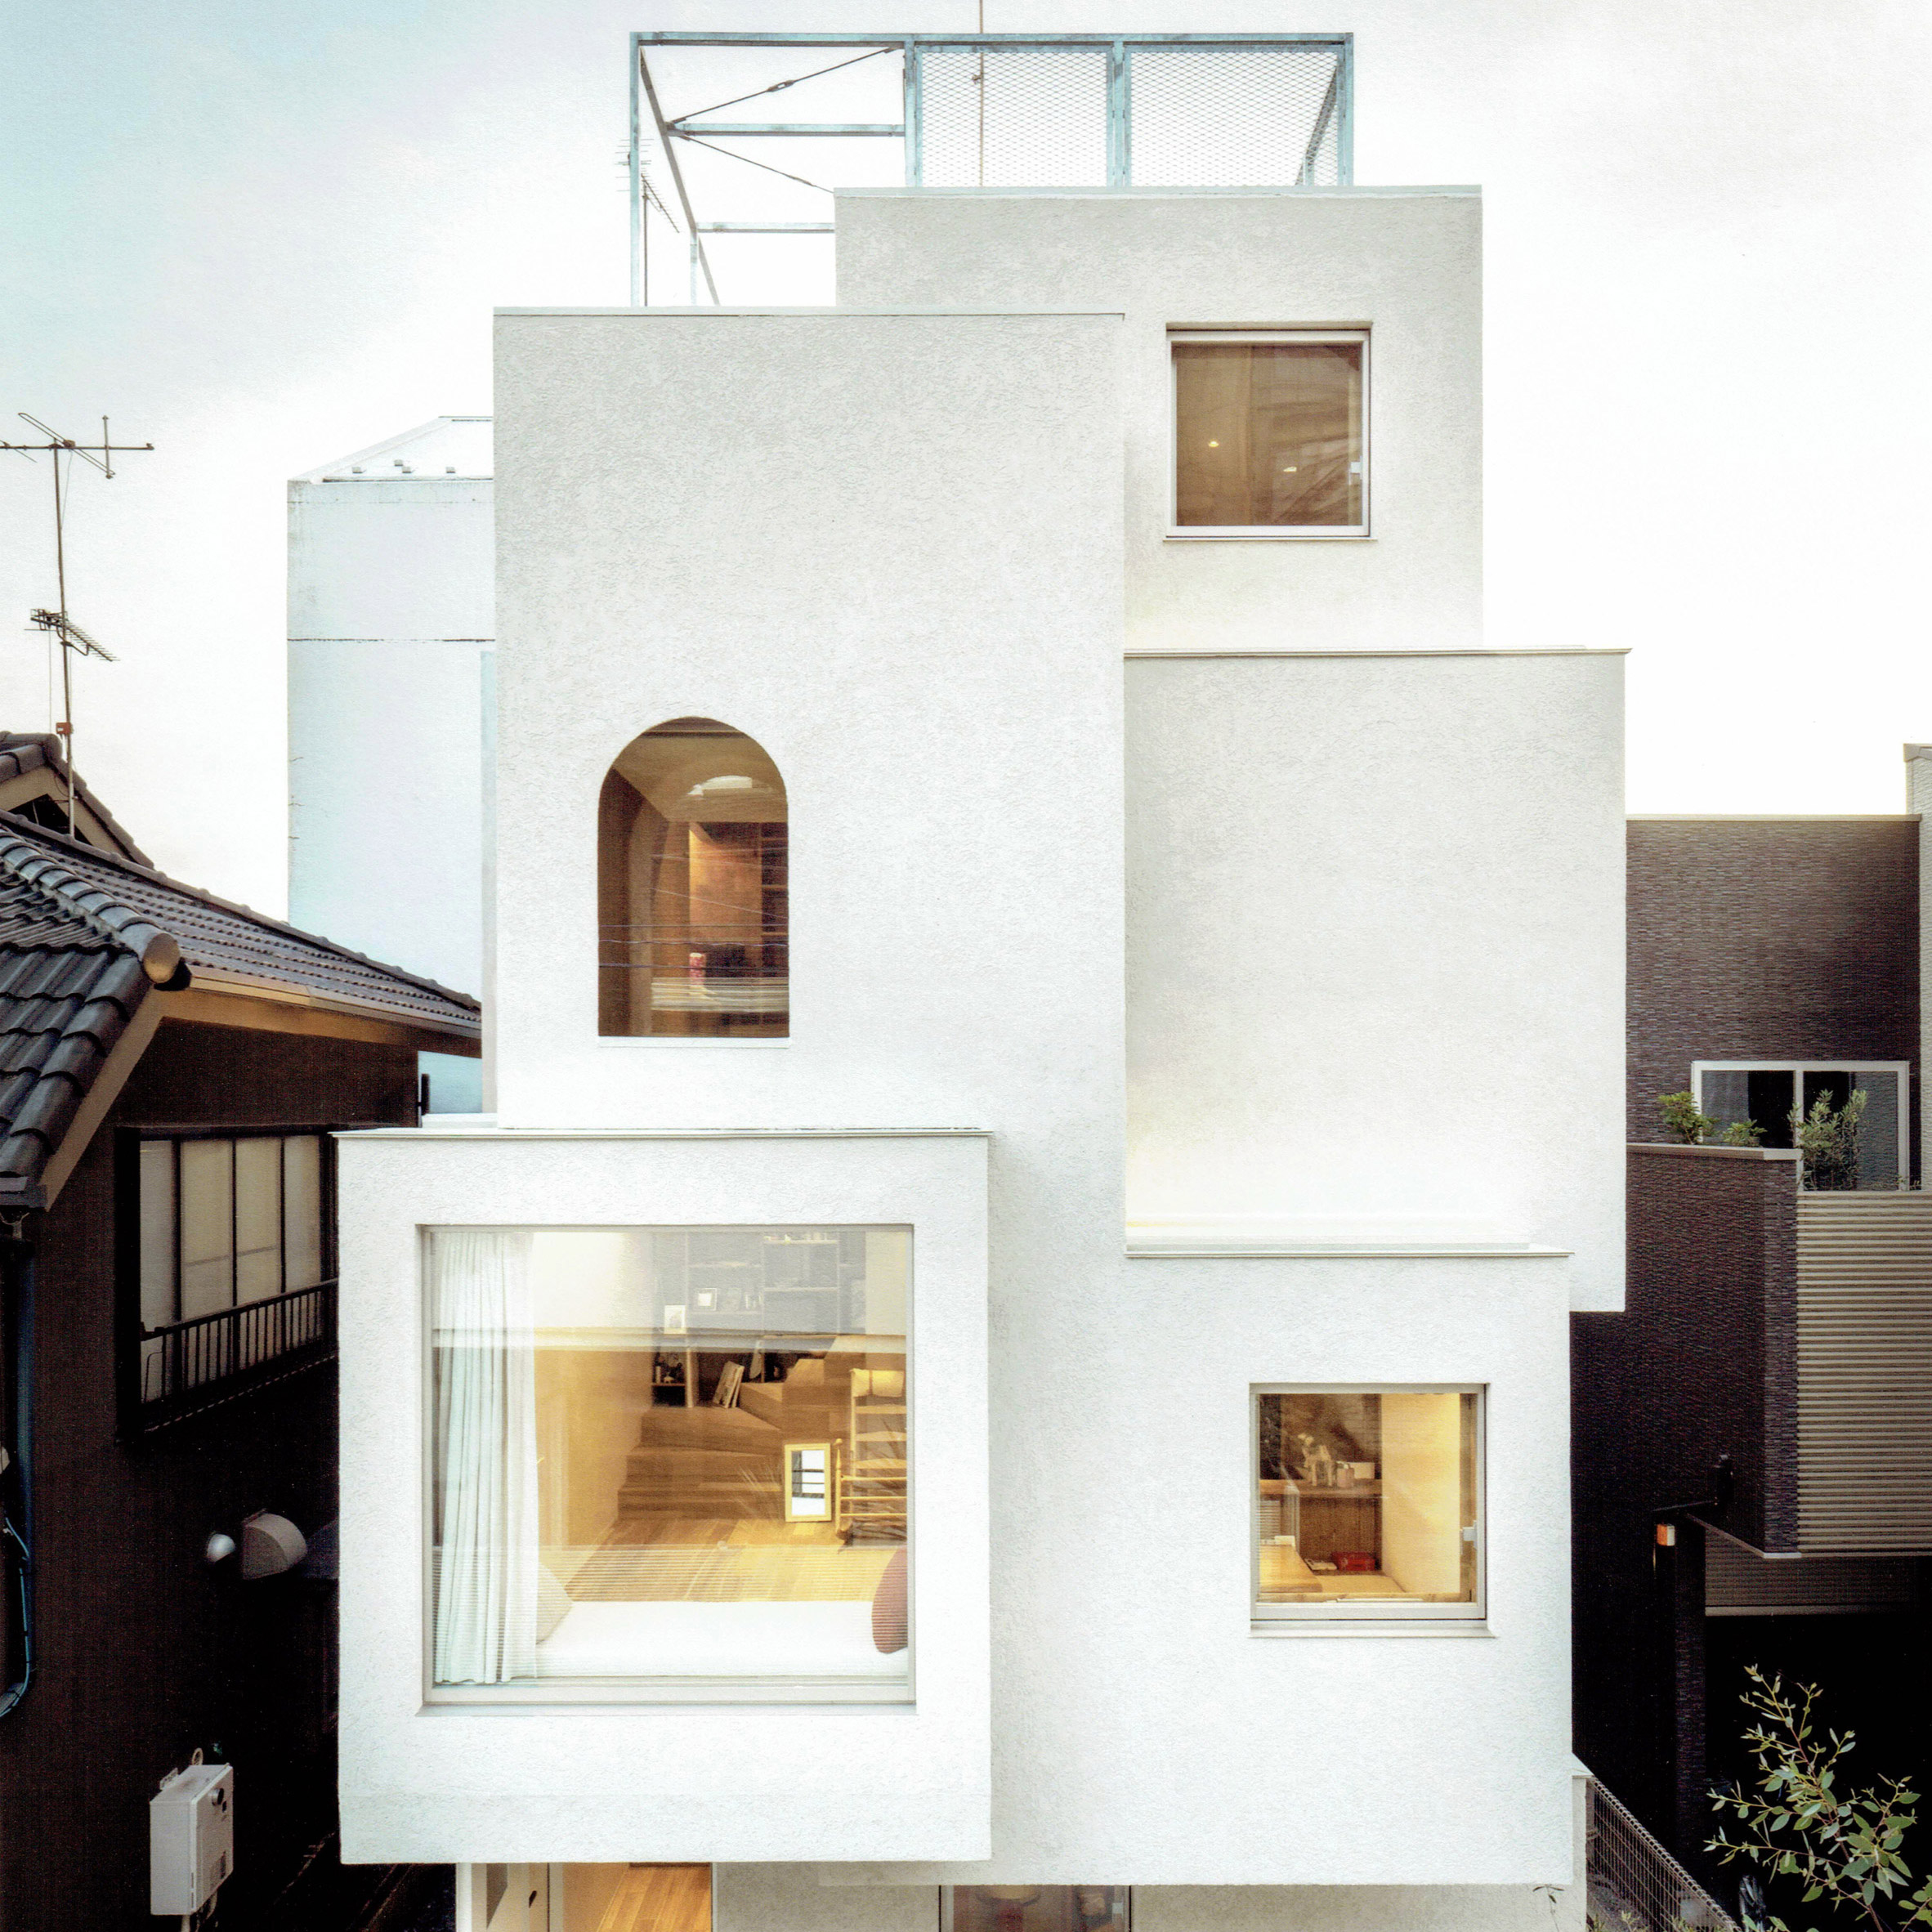 House in the City by Ryosuke Fujii